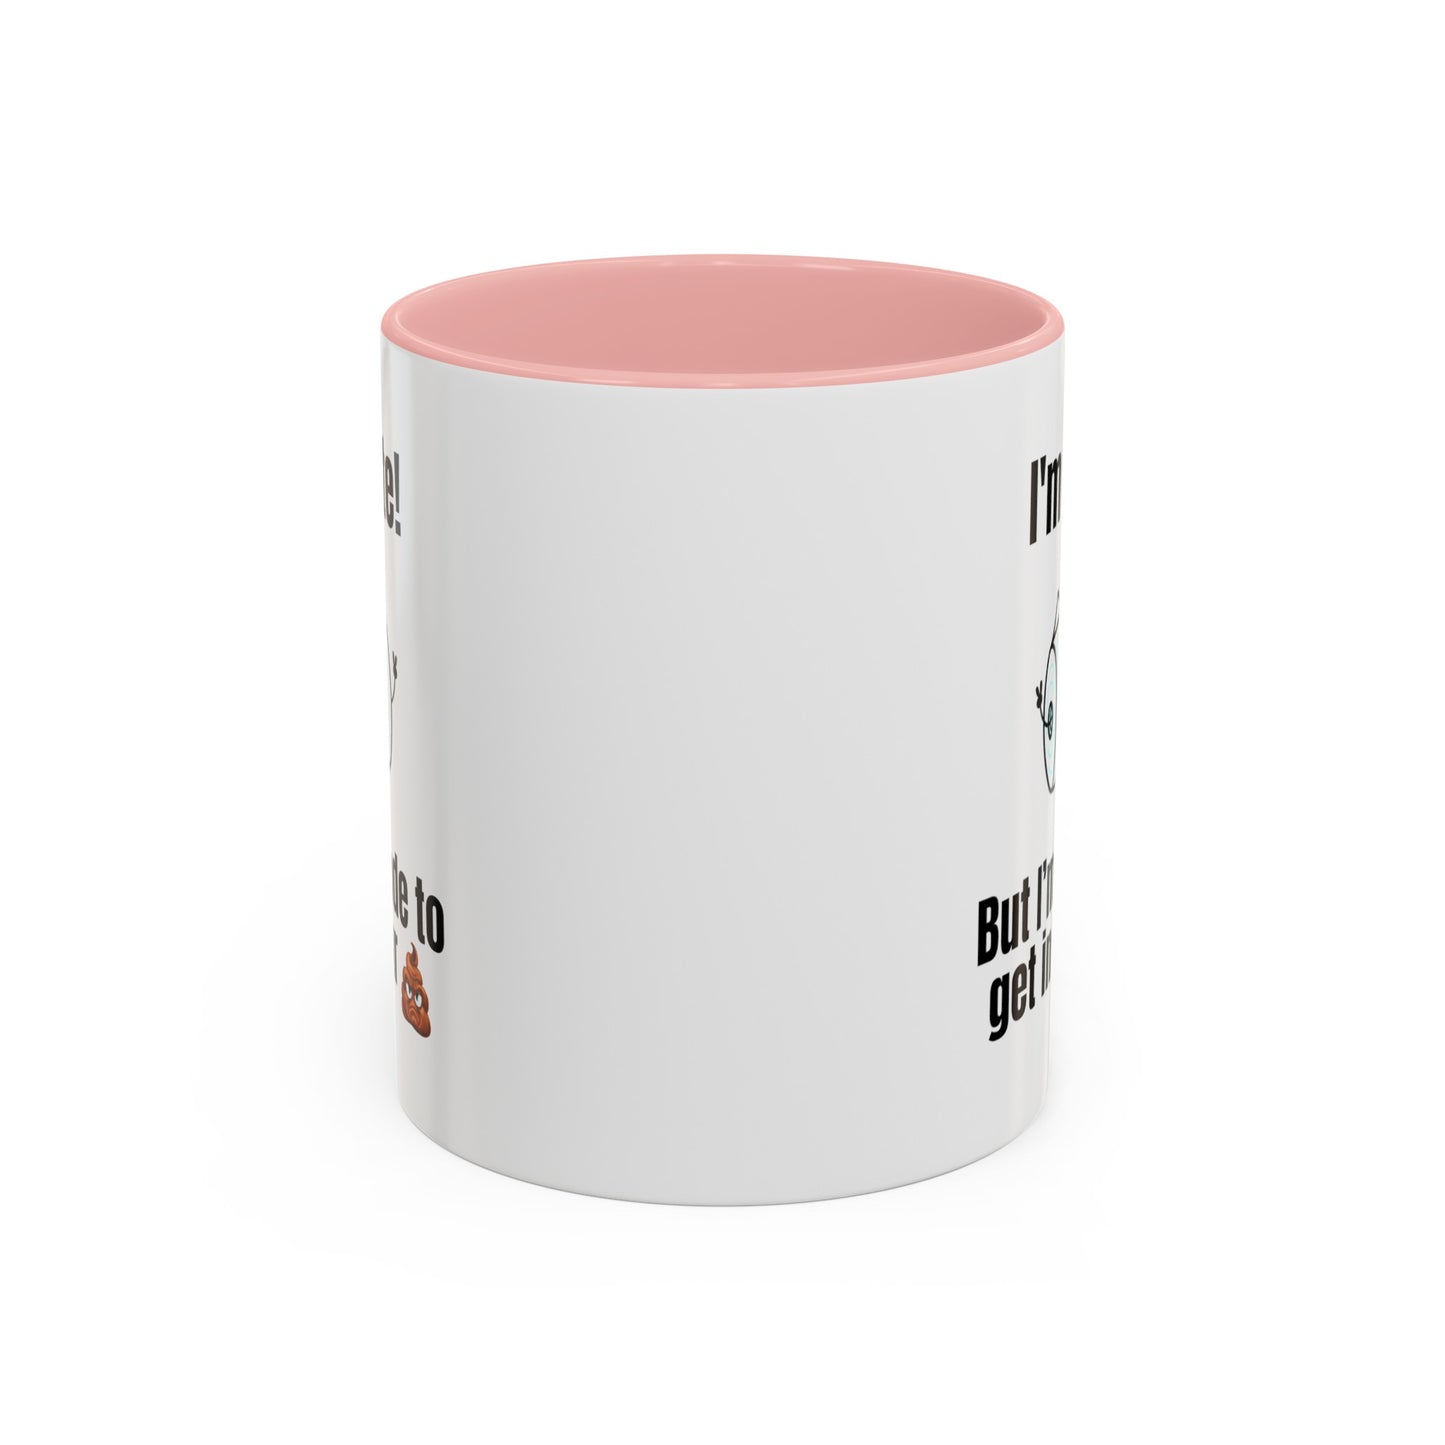 TS- I'm Cute Accent Coffee Mug, 11oz accent colors